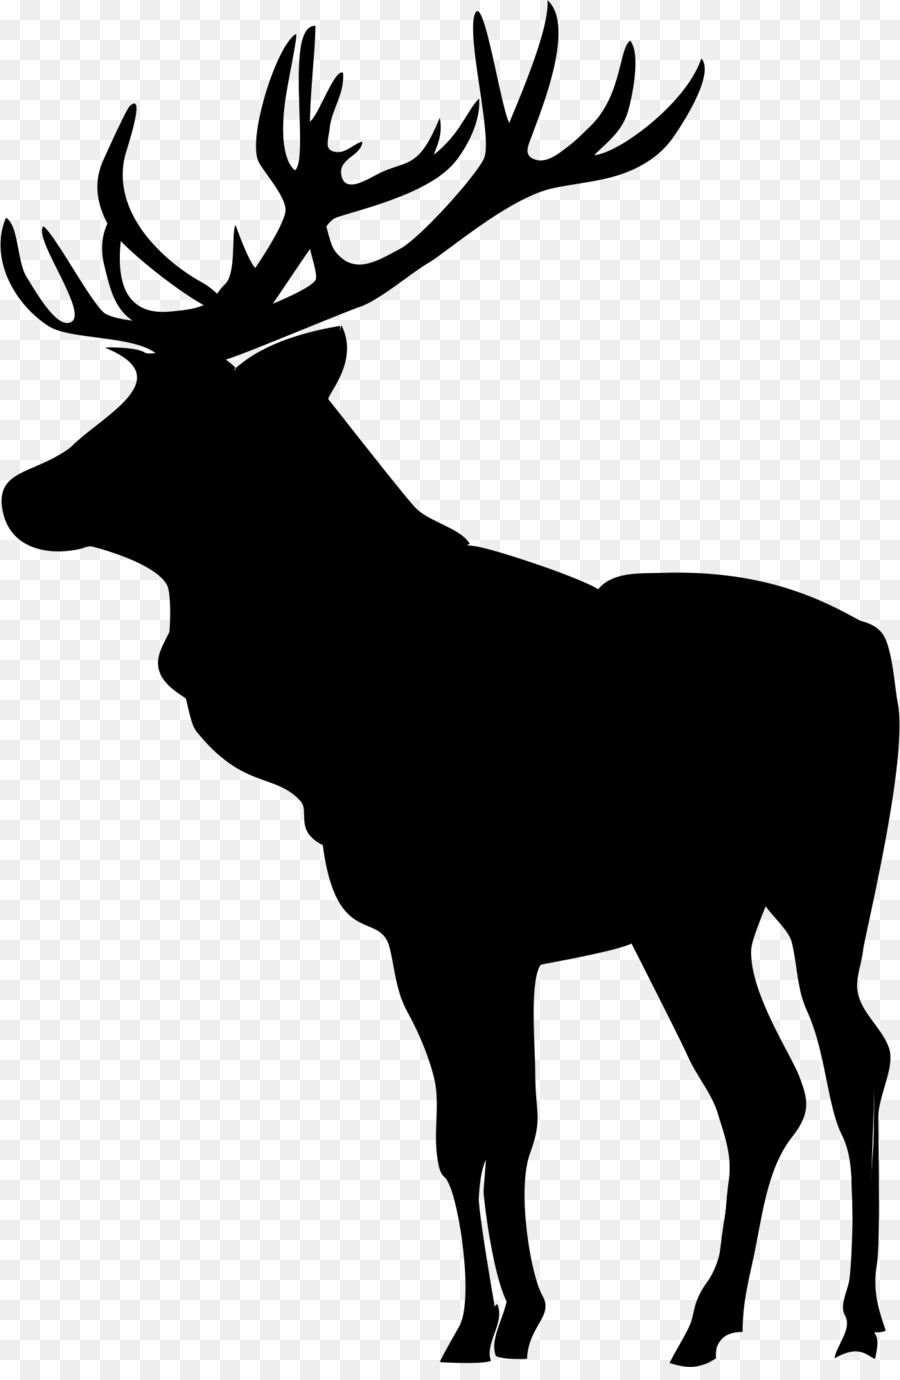 Elk Deer Moose Silhouette Clip art - deer head png download - 1299*1973 - Free Transparent Elk png Download.